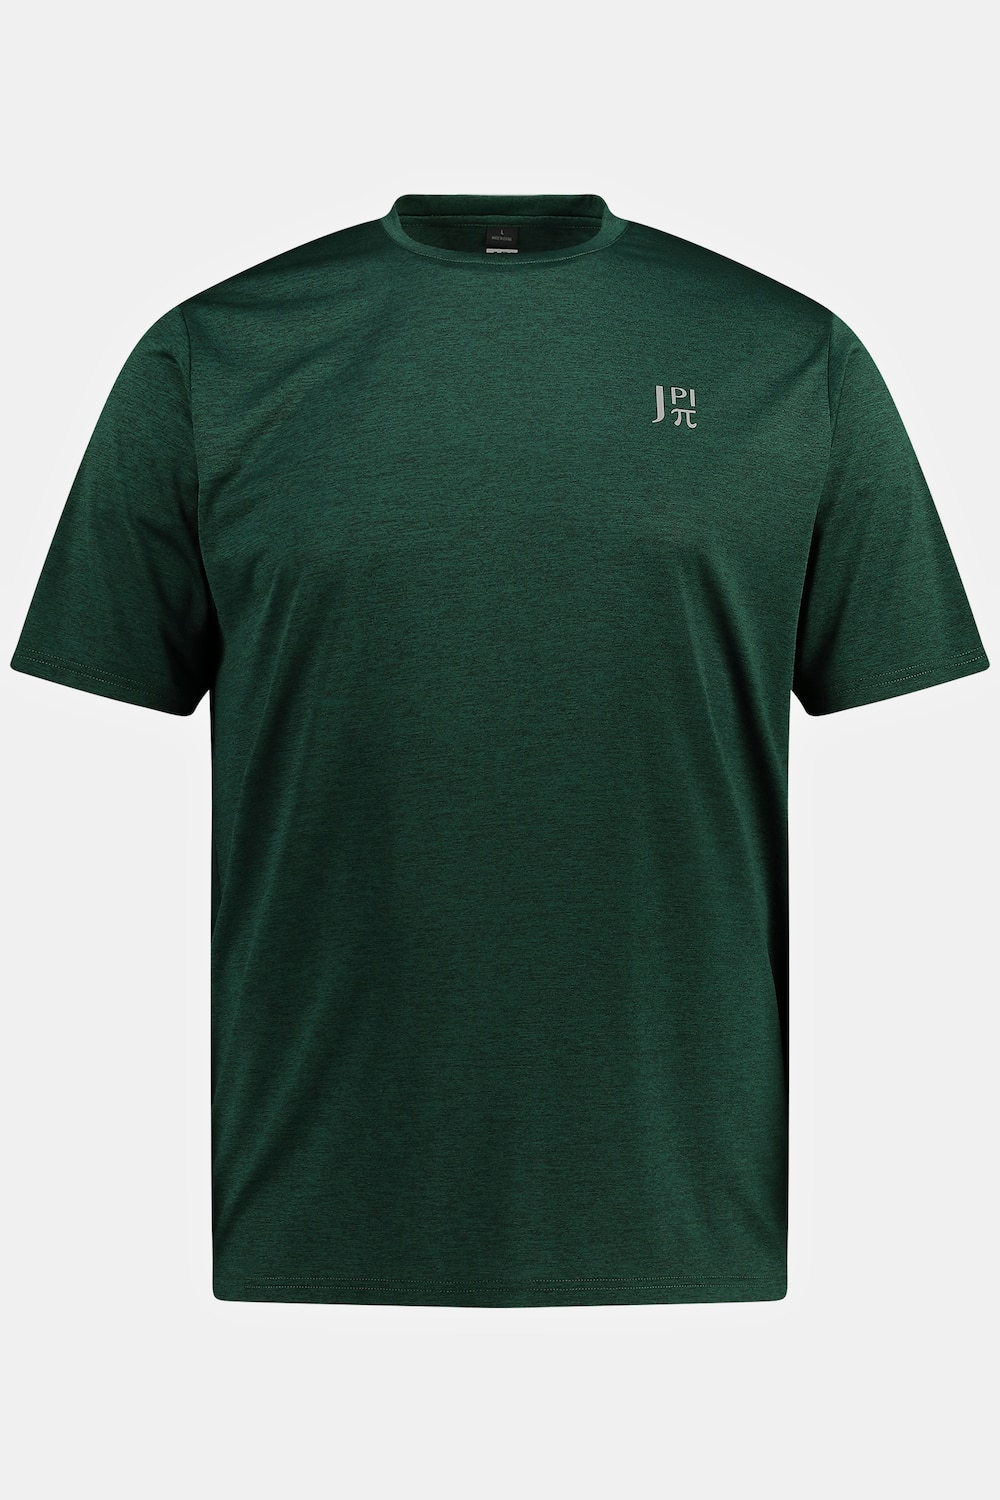 Grote Maten JAY-PI functioneel shirt FLEXNAMIC®male, groen, Maat: 4XL, Polyester, JAY-PI